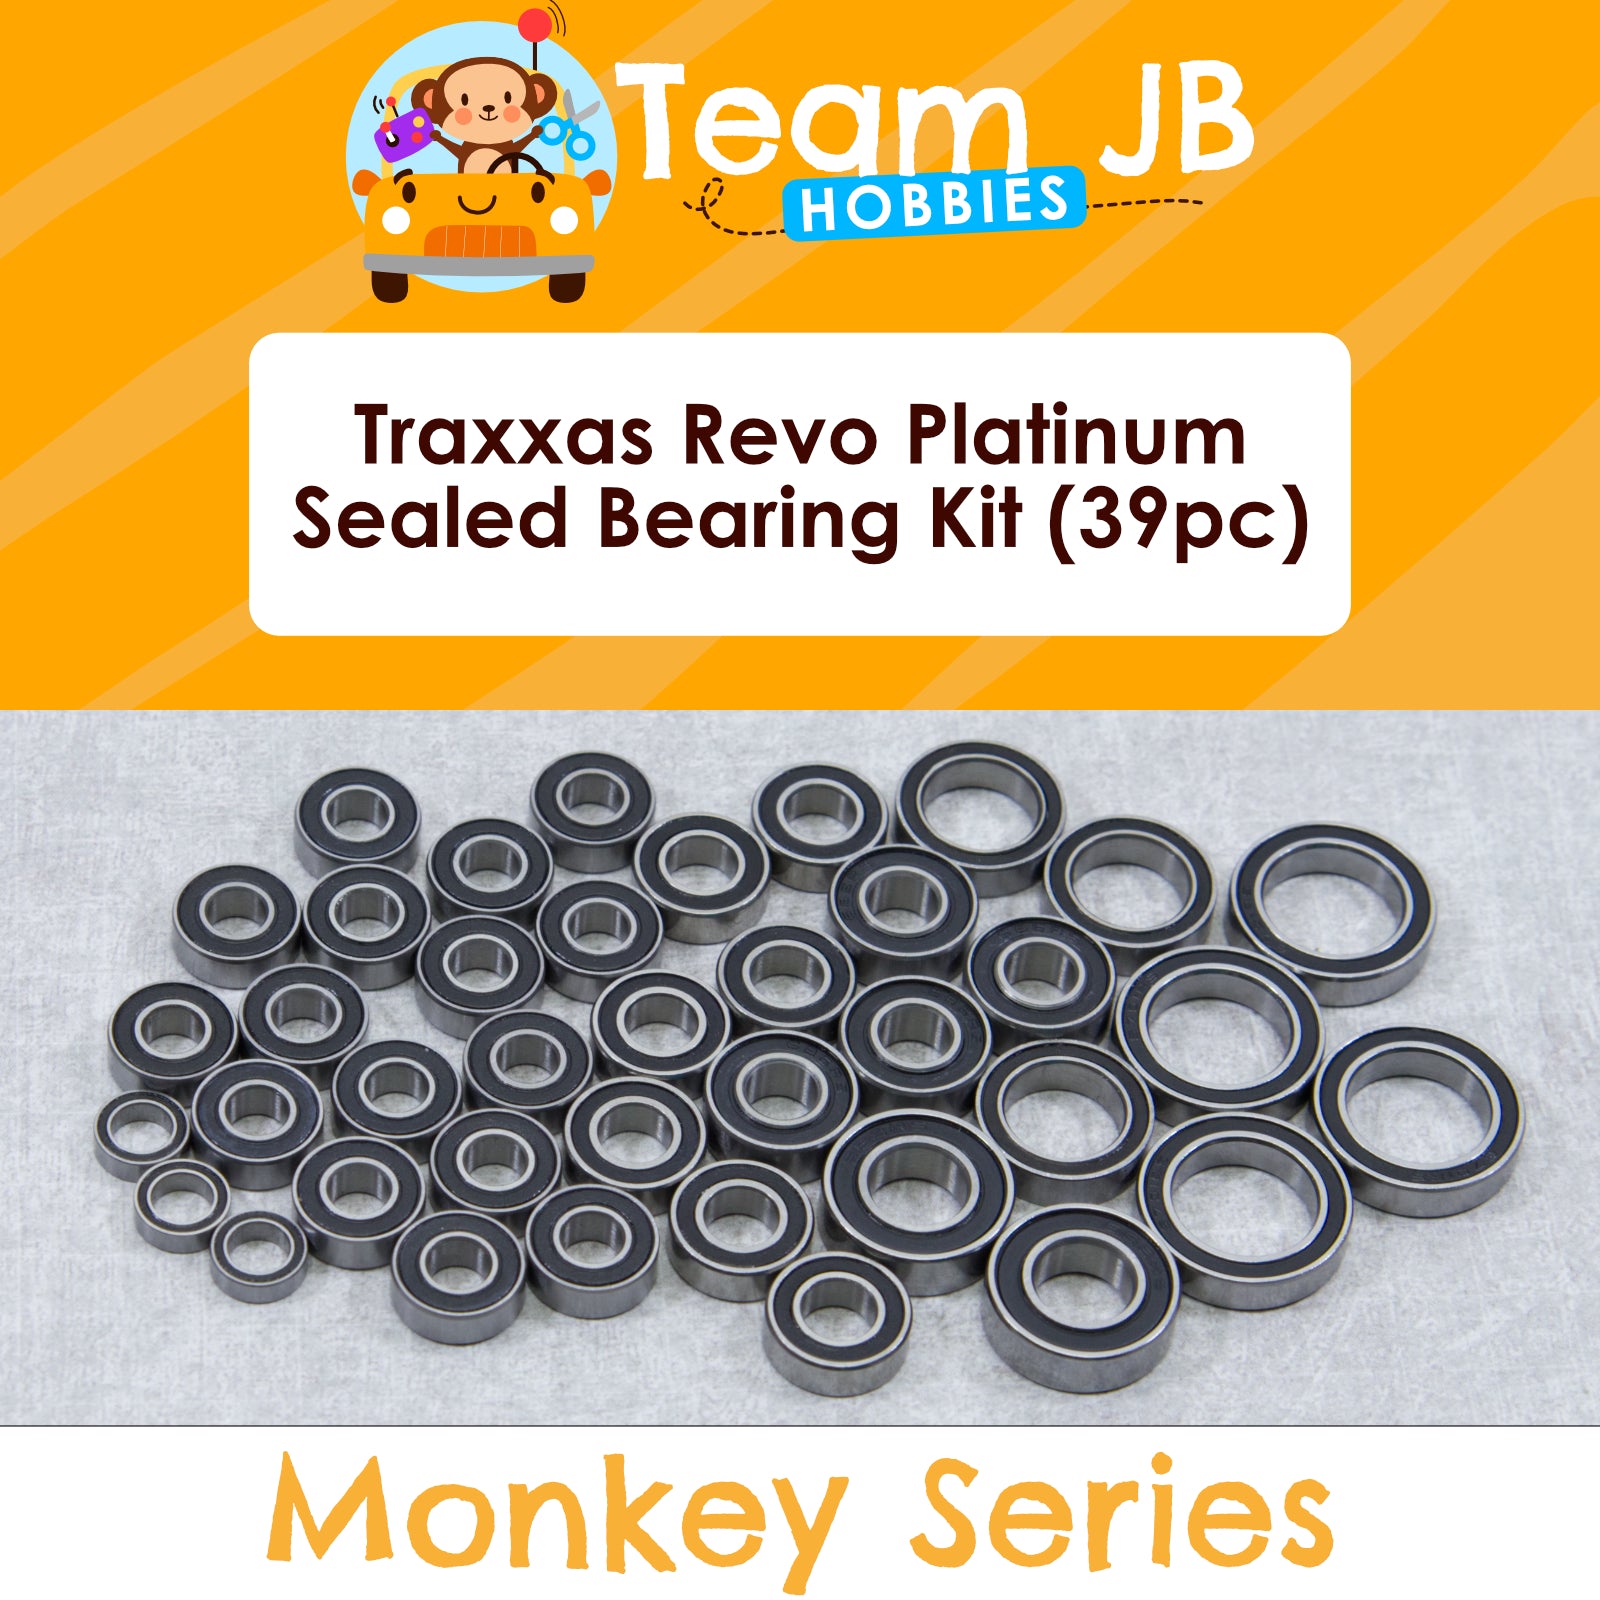 Traxxas Revo Platinum - Sealed Bearing Kit